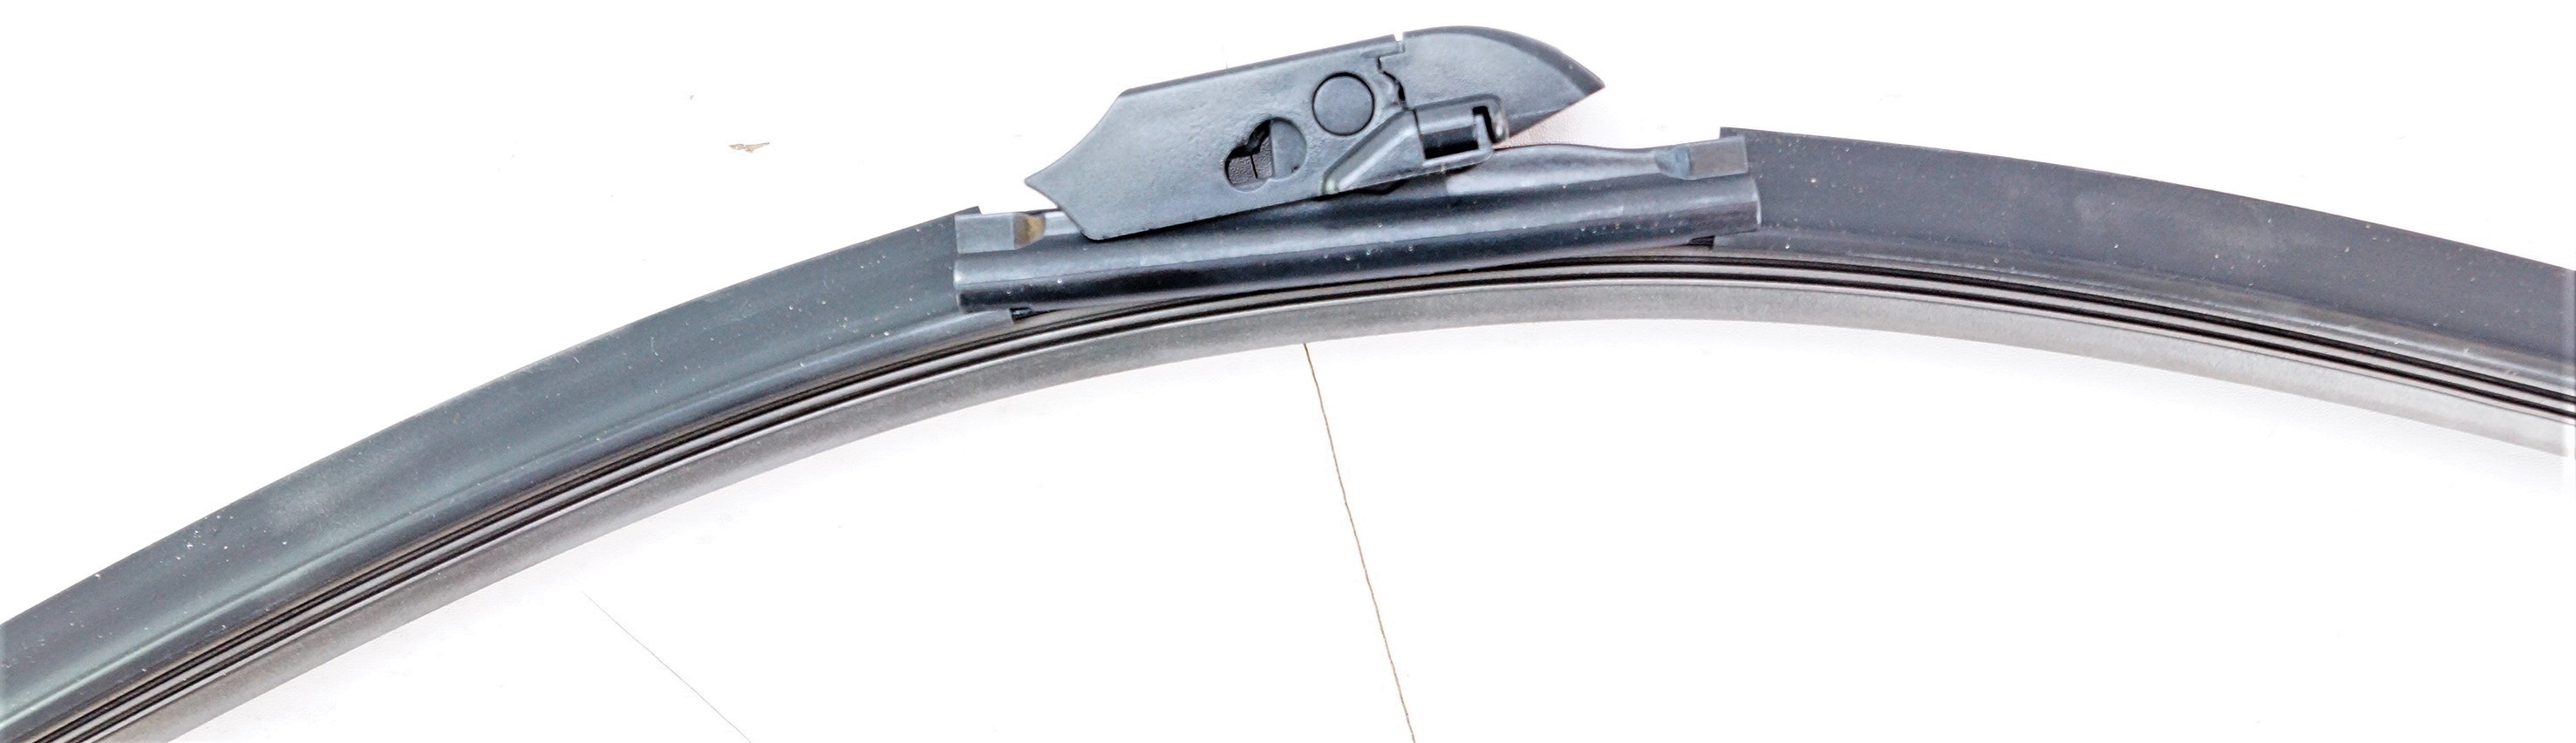 New Michelin 18â€ Radius Premium Beam w/ Frameless Curved Design Wiper Blade - image 9